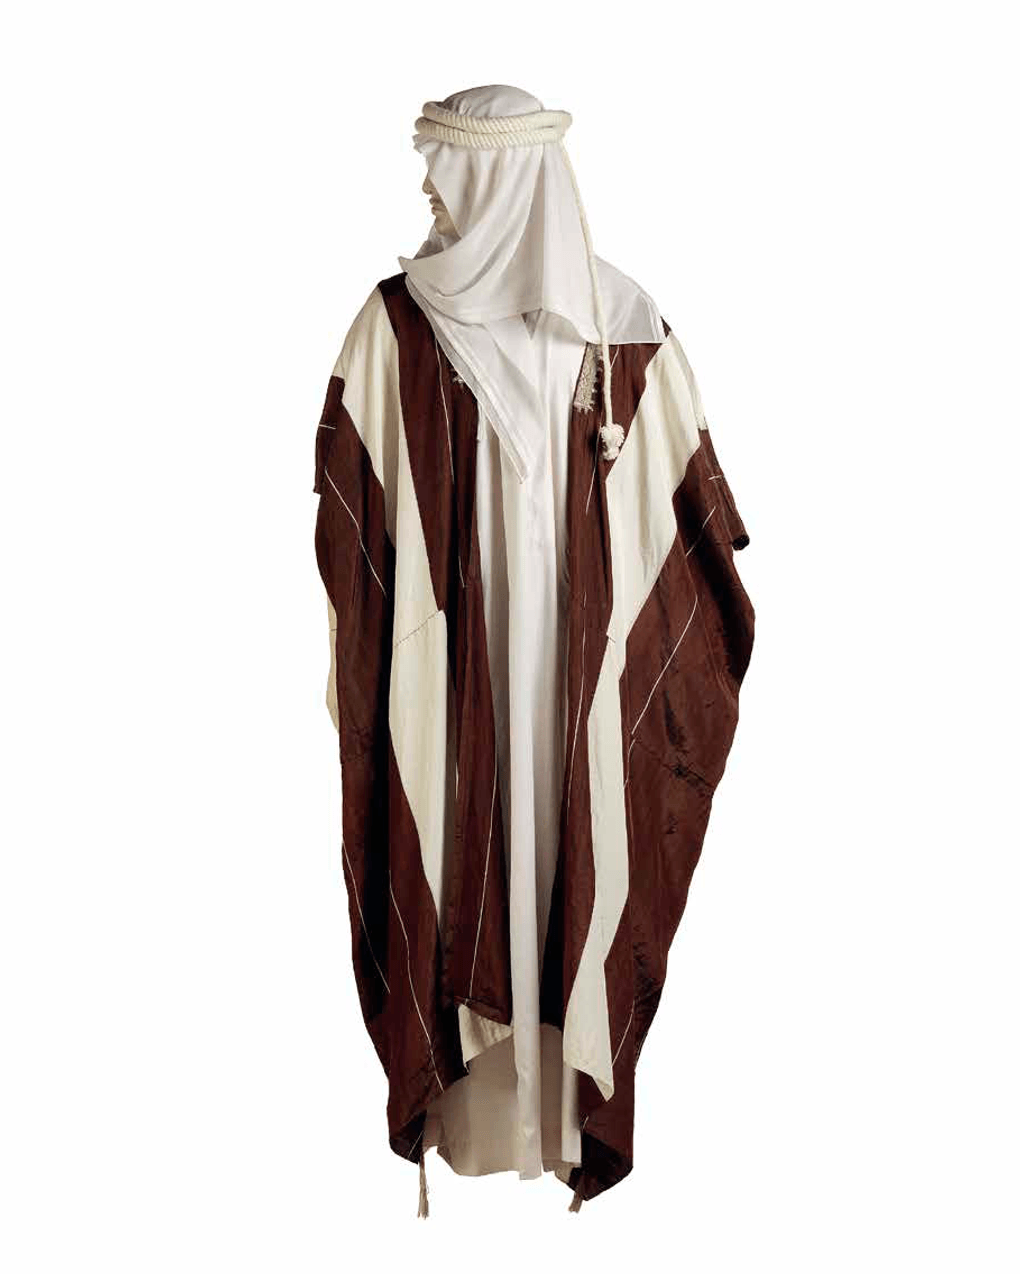 Катарский бишт, тауб, гутра. XIX век. Фотография предоставлена Музеем шейха Фейсала, Катар